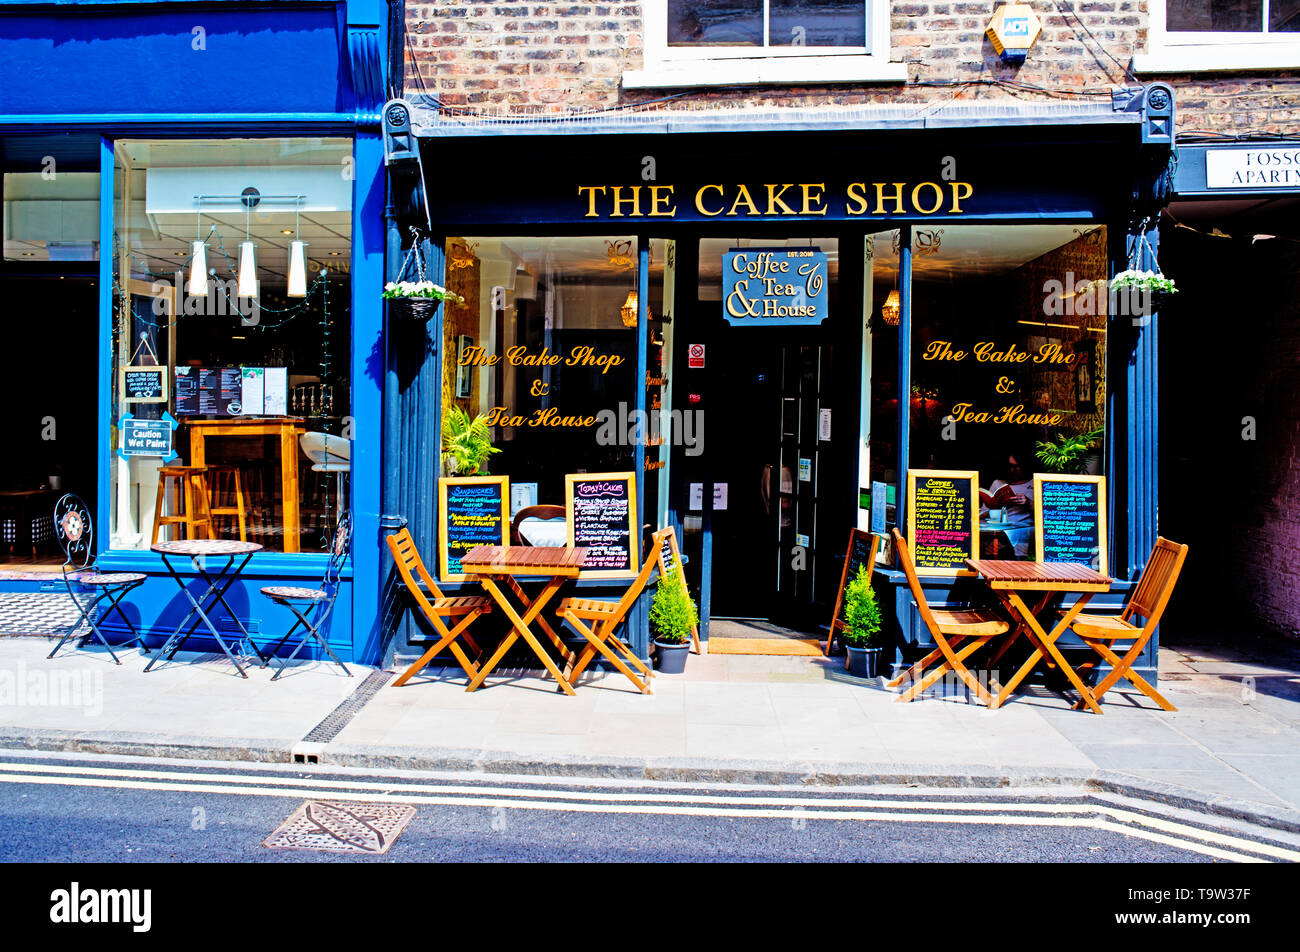 Le Cake Shop, Fossgate, York, Angleterre Banque D'Images